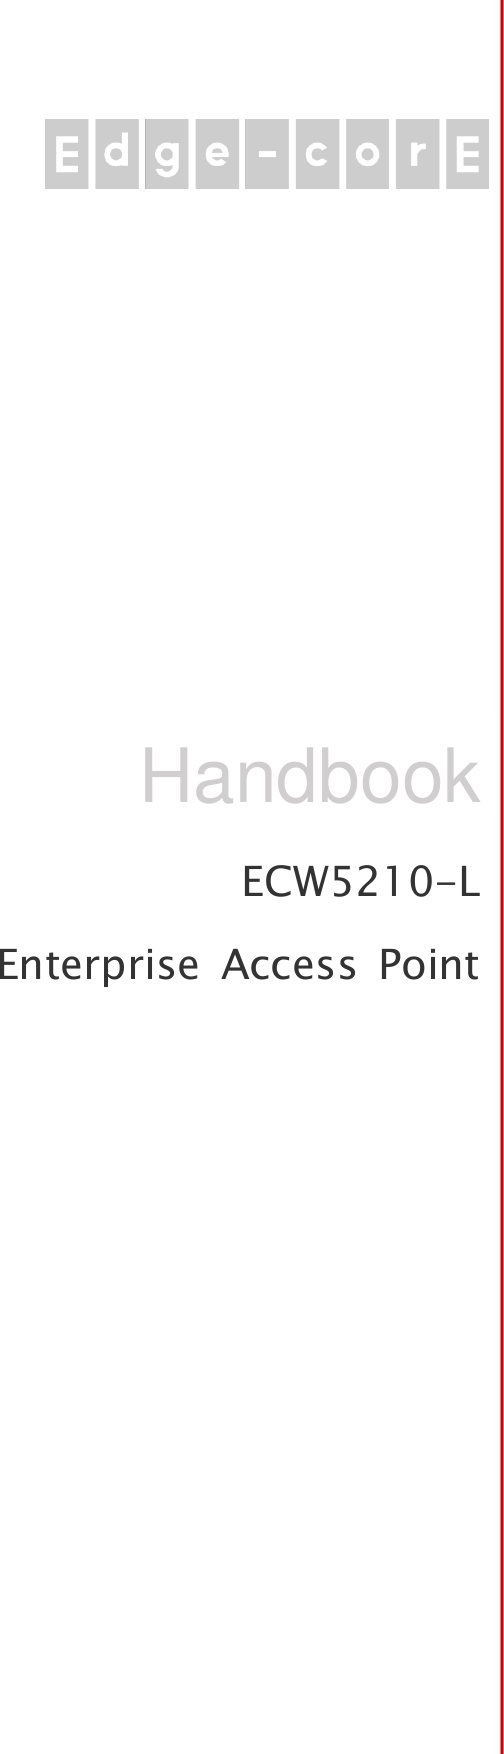   ECW5210-L Enterprise  Access  Point Handbook 